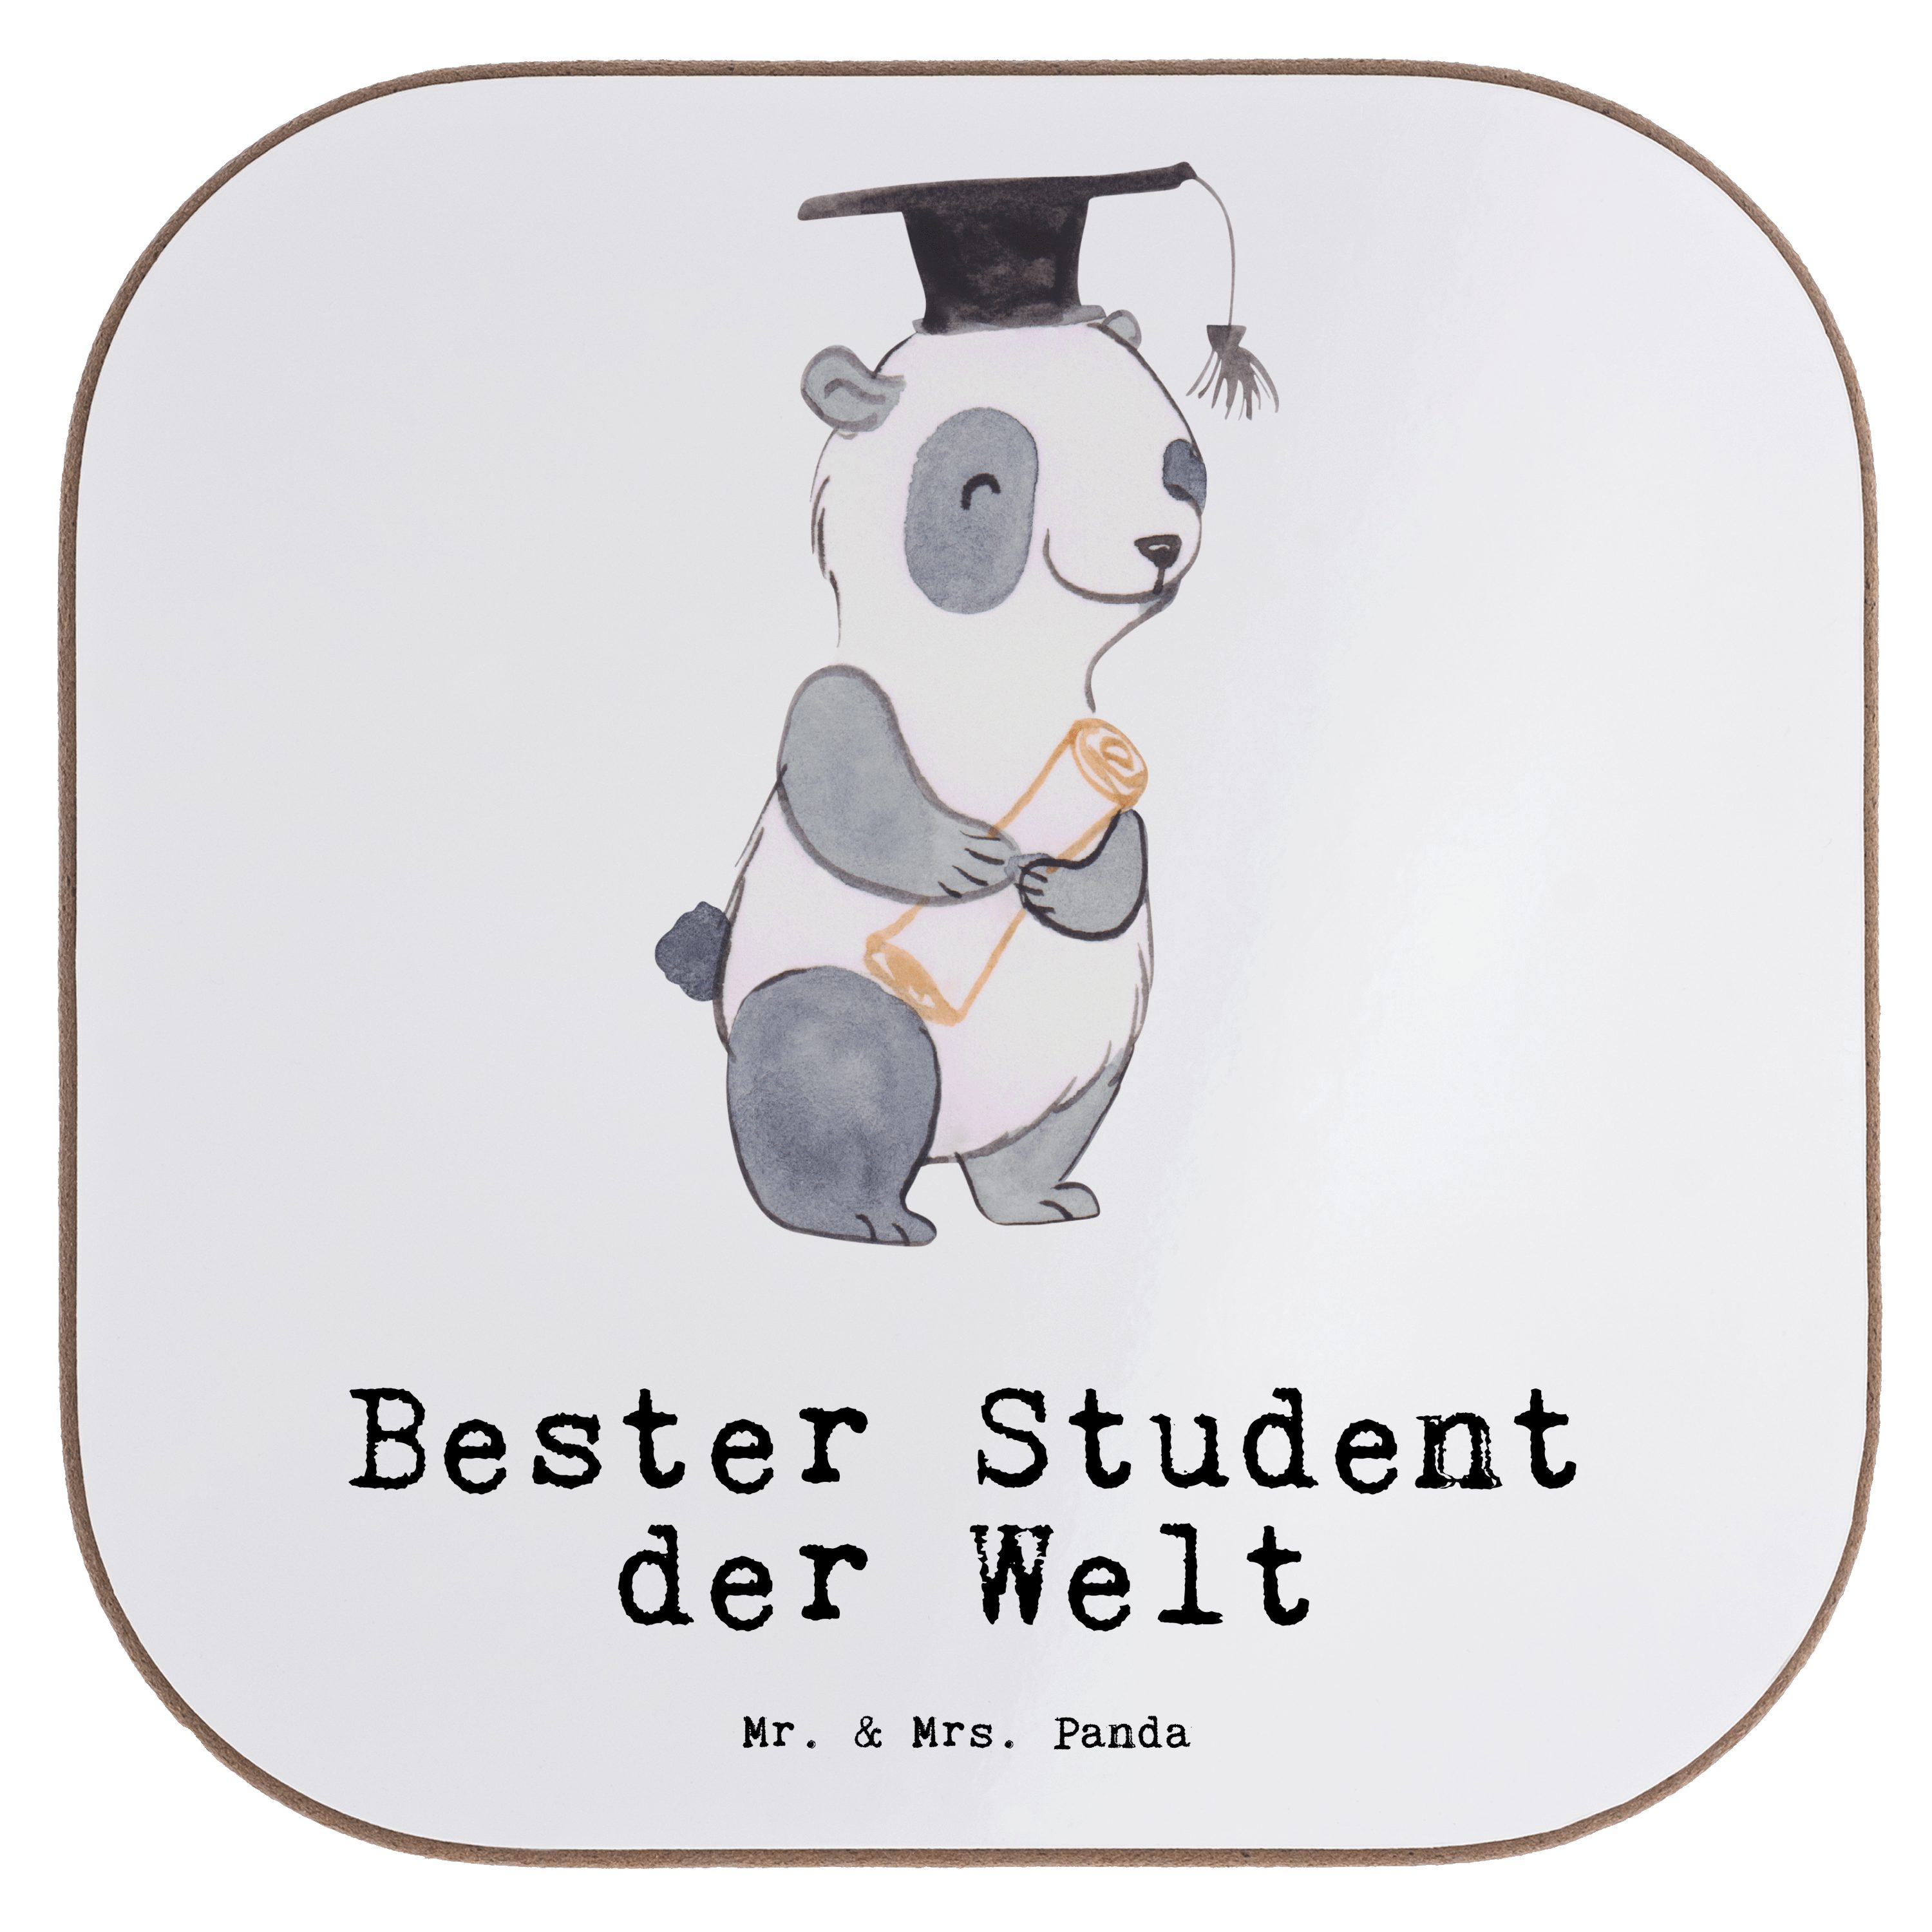 Mr. & Mrs. Panda Getränkeuntersetzer Panda Bester Student der Welt - Weiß - Geschenk, Untersetzer Gläser, 1-tlg. | Getränkeuntersetzer